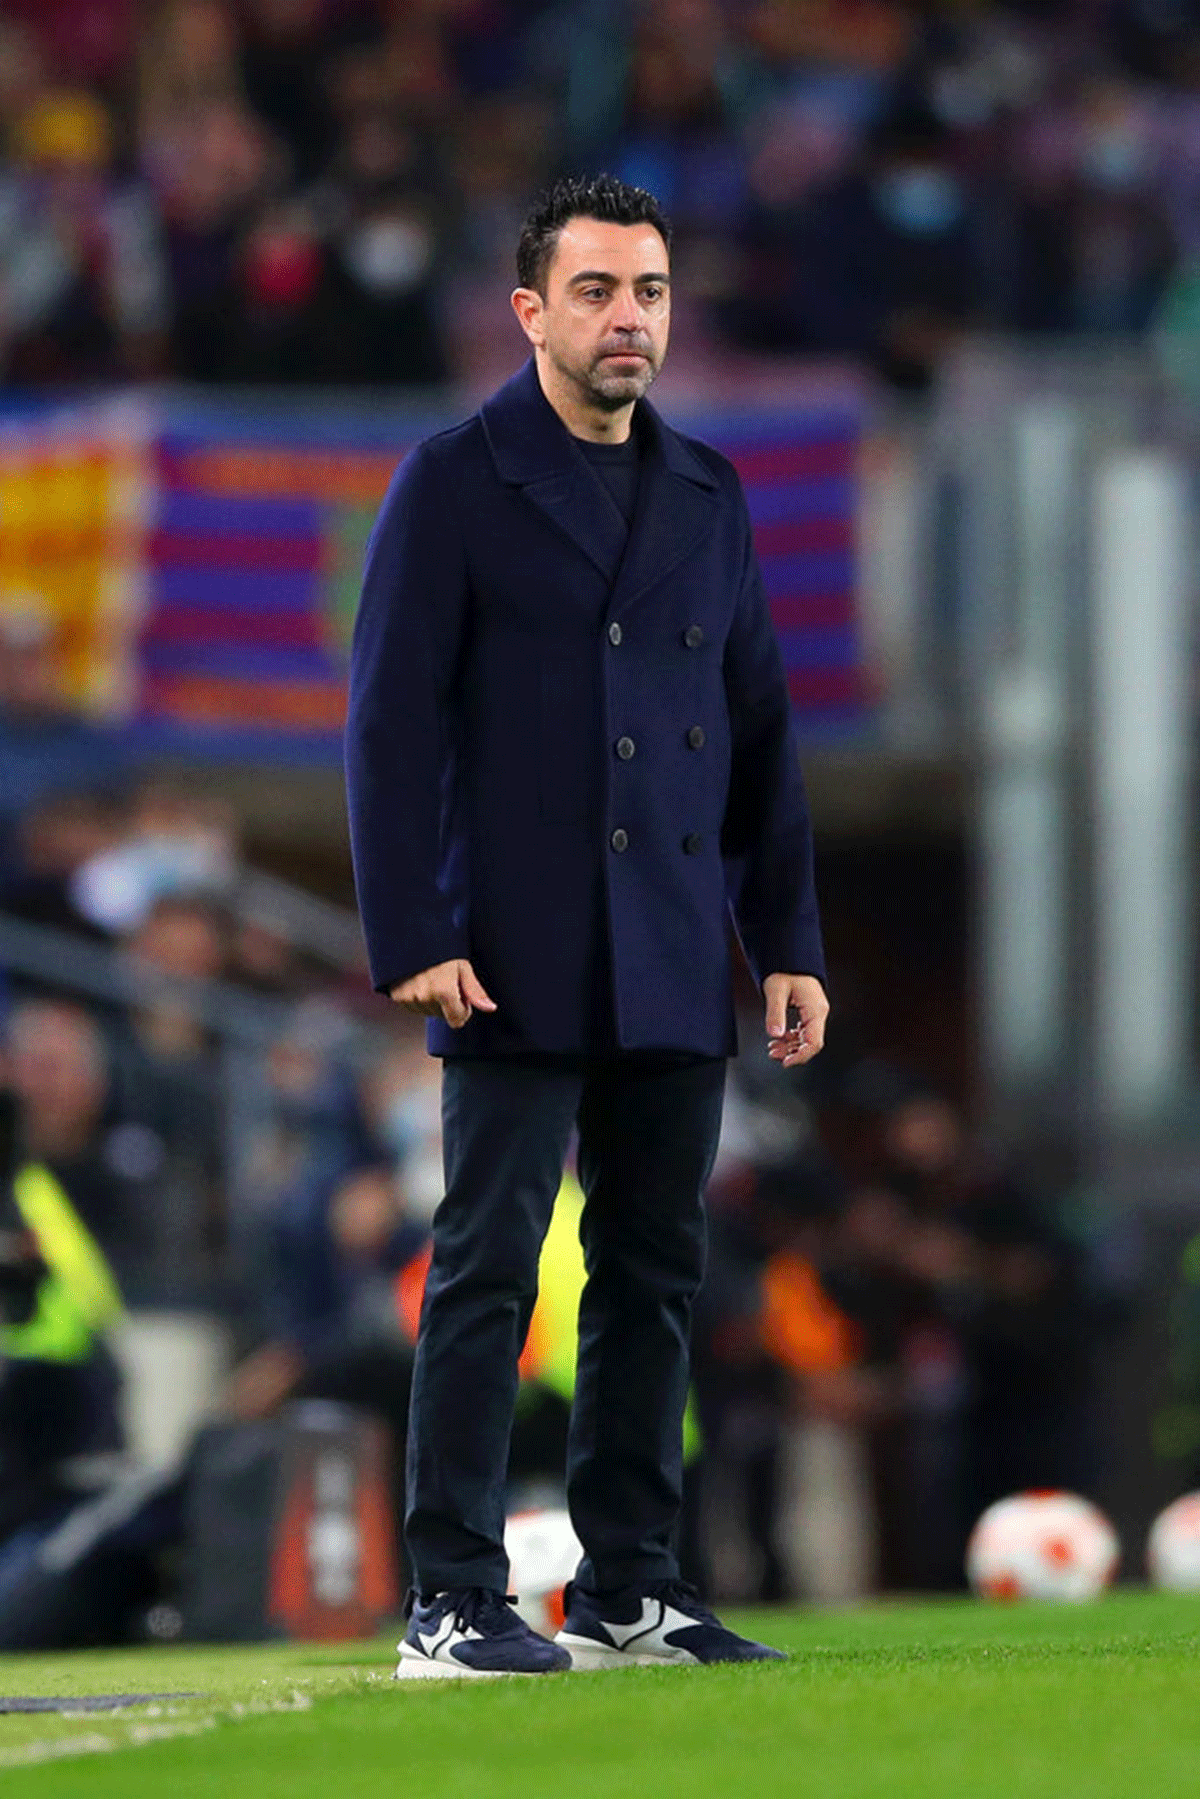 Barcelona head coach Xavi Hernandez cuts a frustrated figure during the match